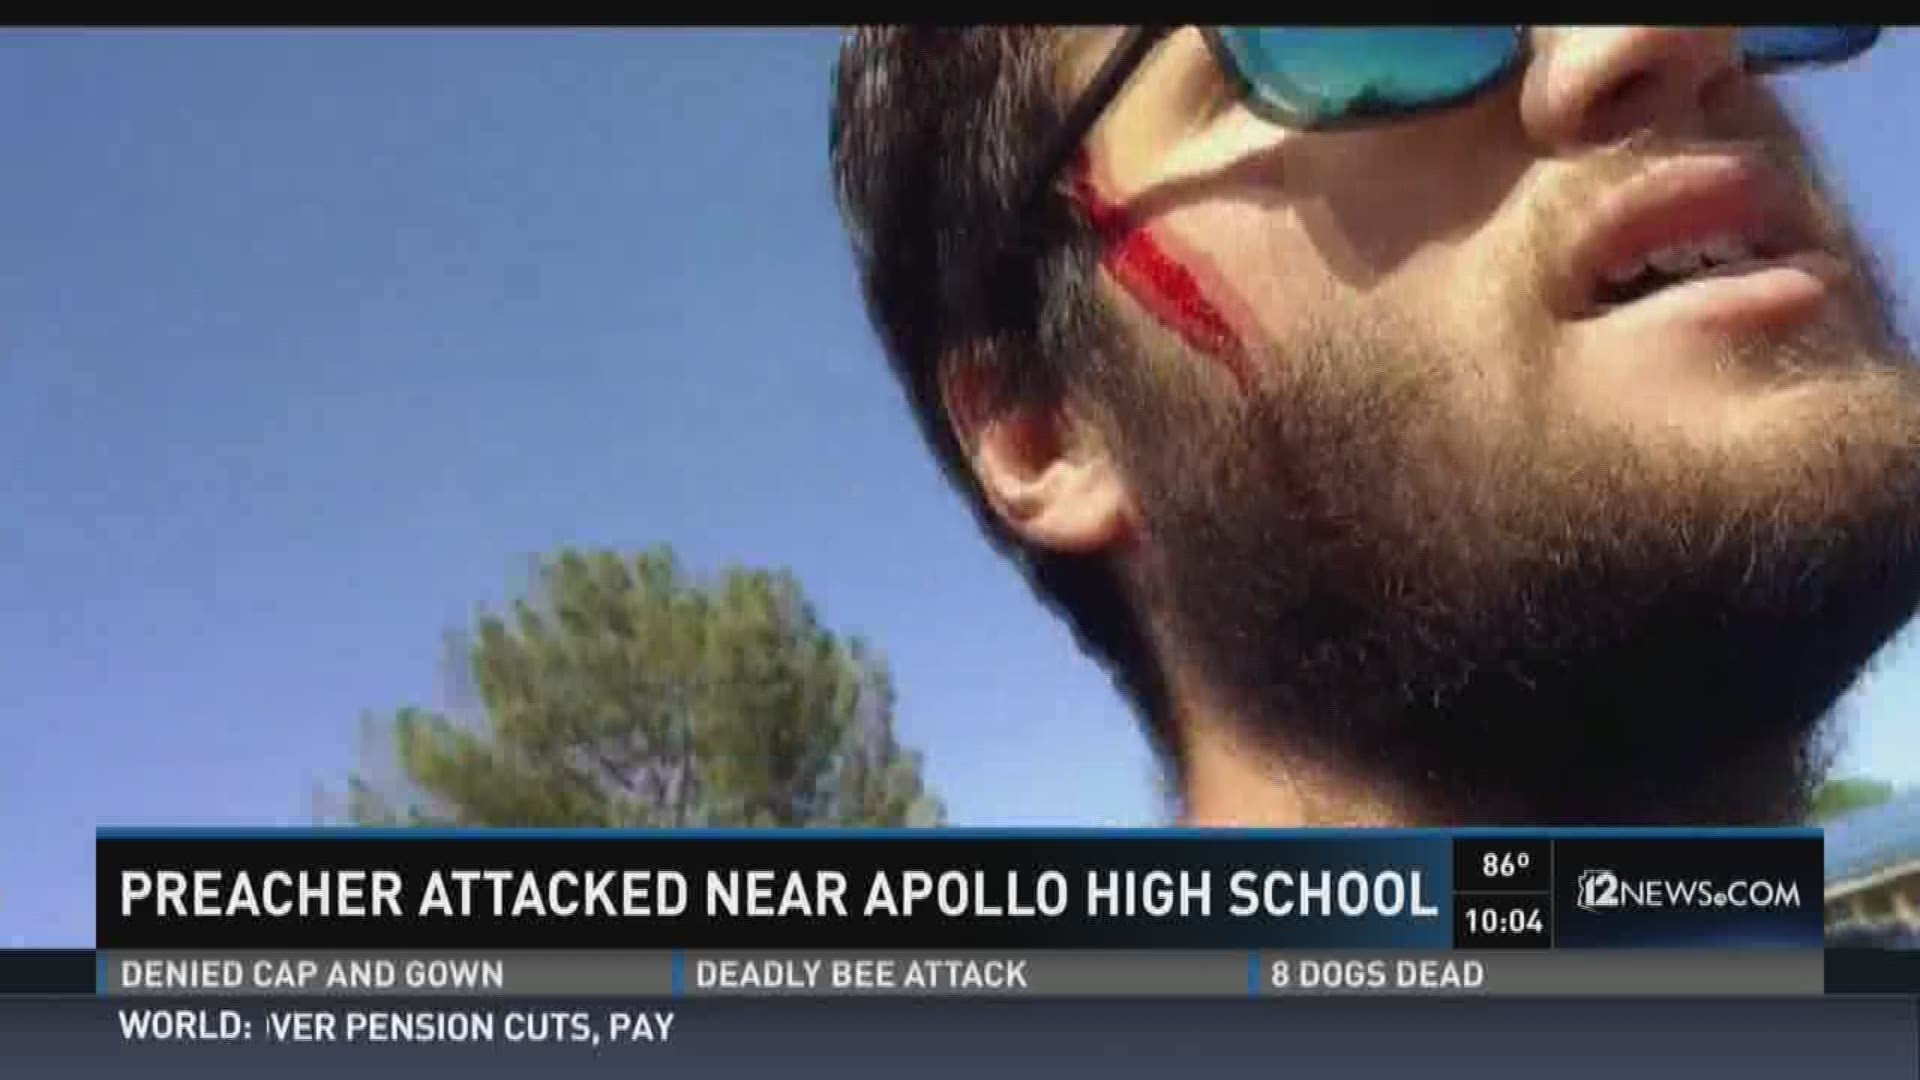 Preacher attacked near Apollo high school.